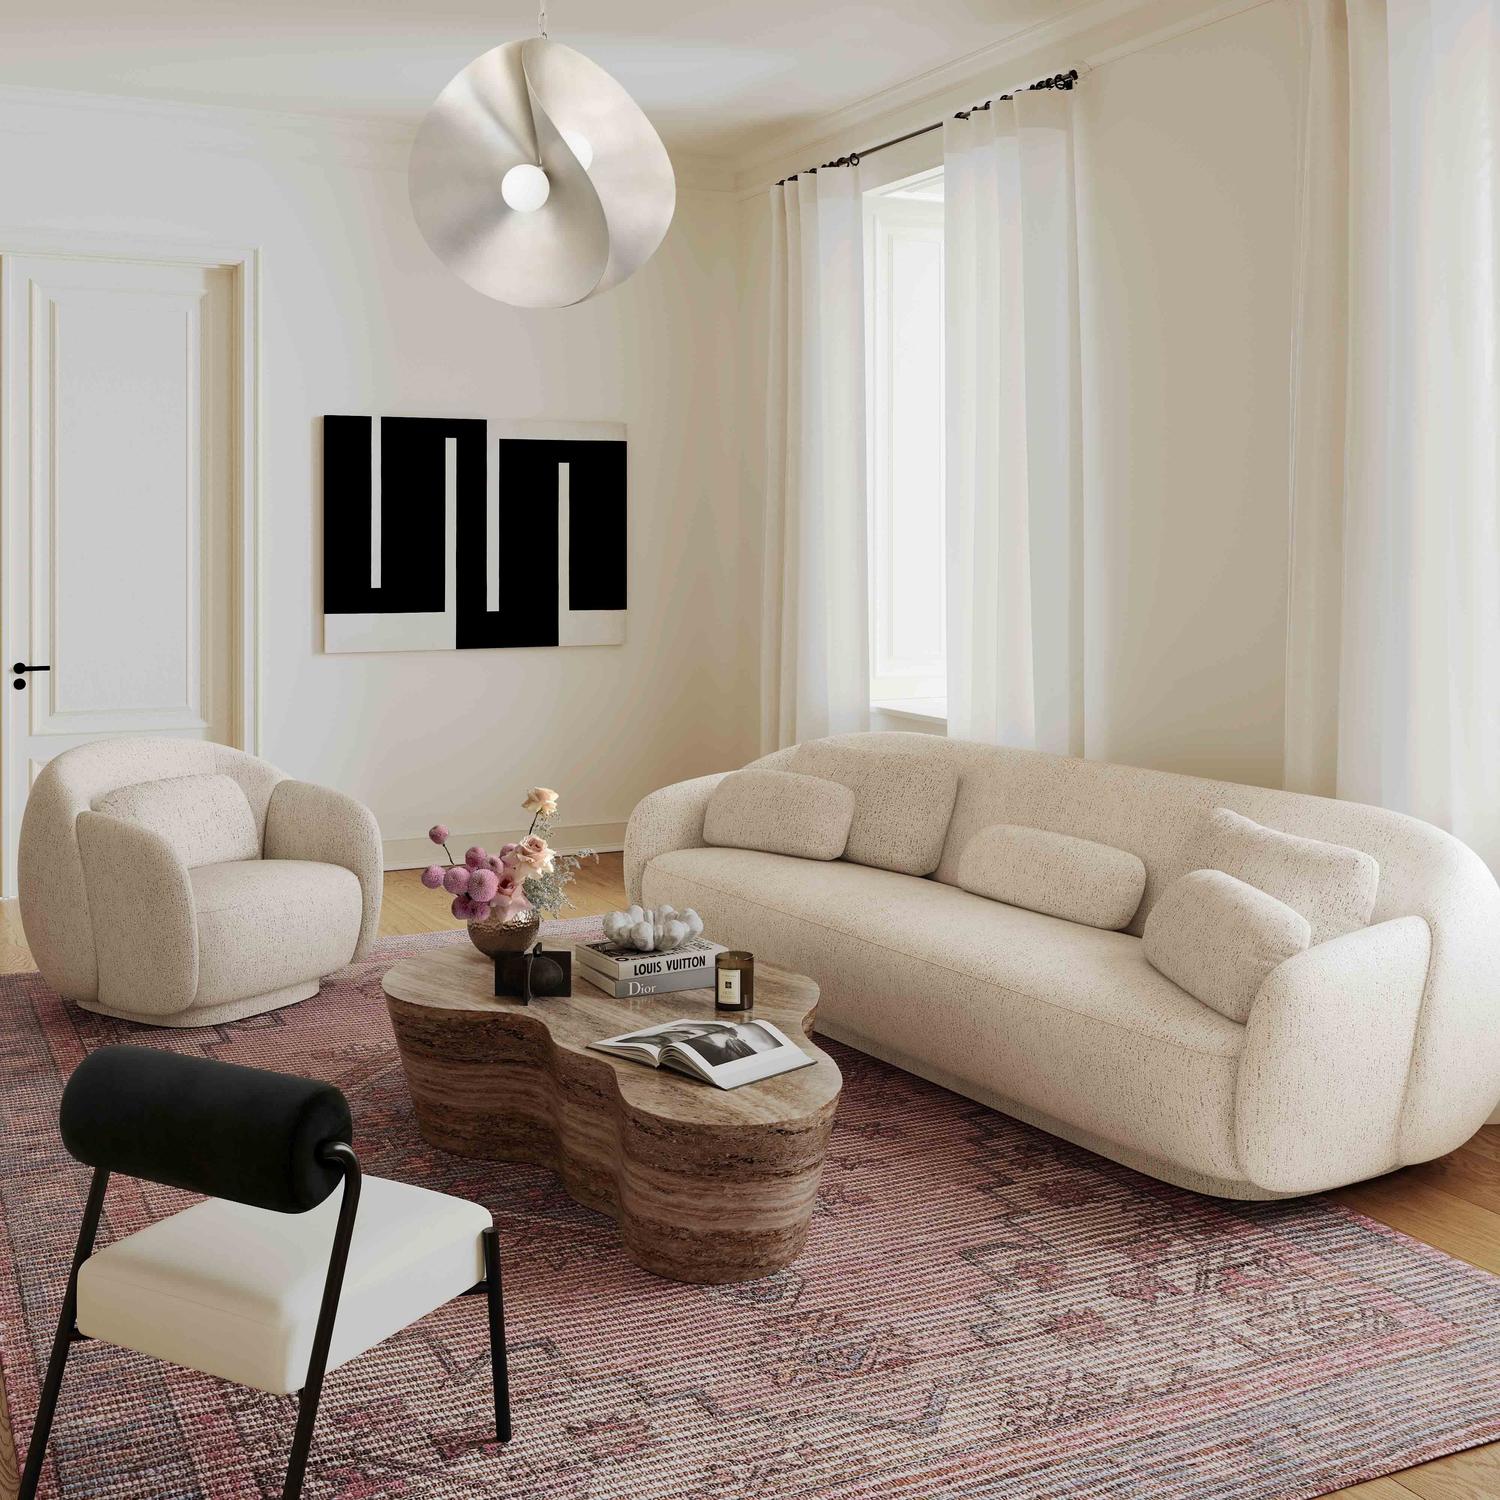 sofa couch cheap Tov Furniture Sofas Cream